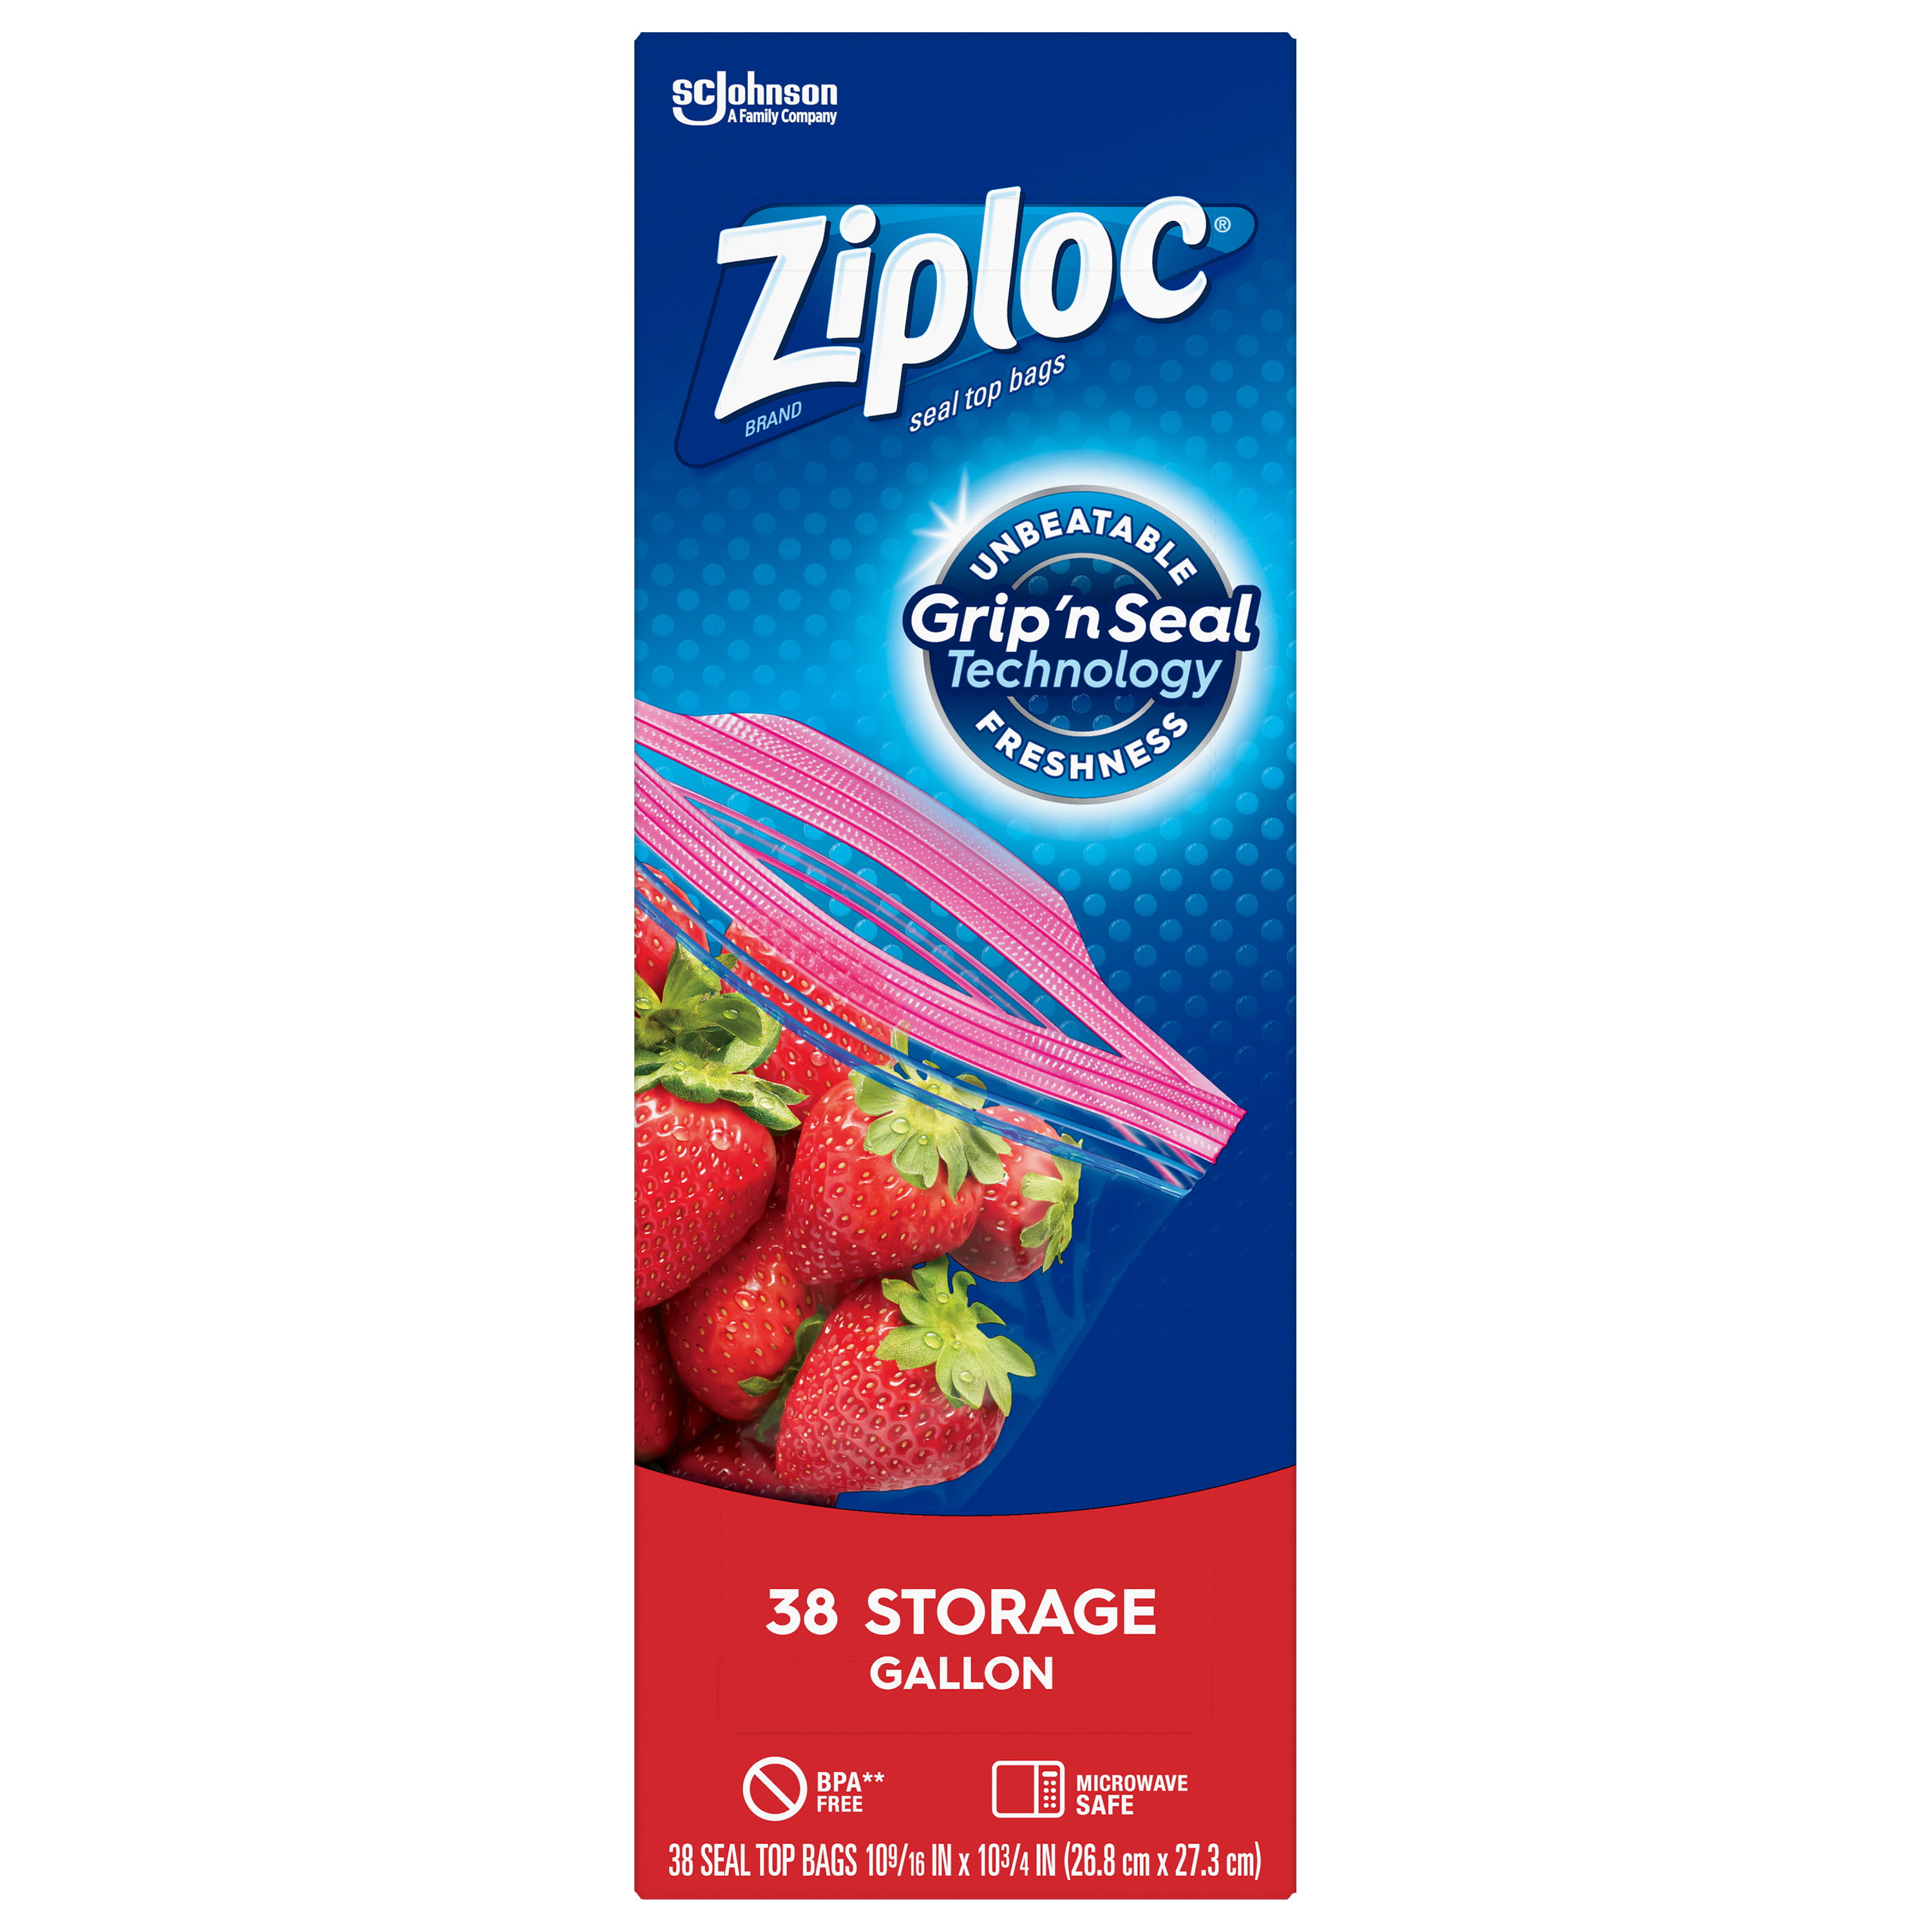 Ziploc Double Zipper Freezer Bag Gallon 4-pack 38-count